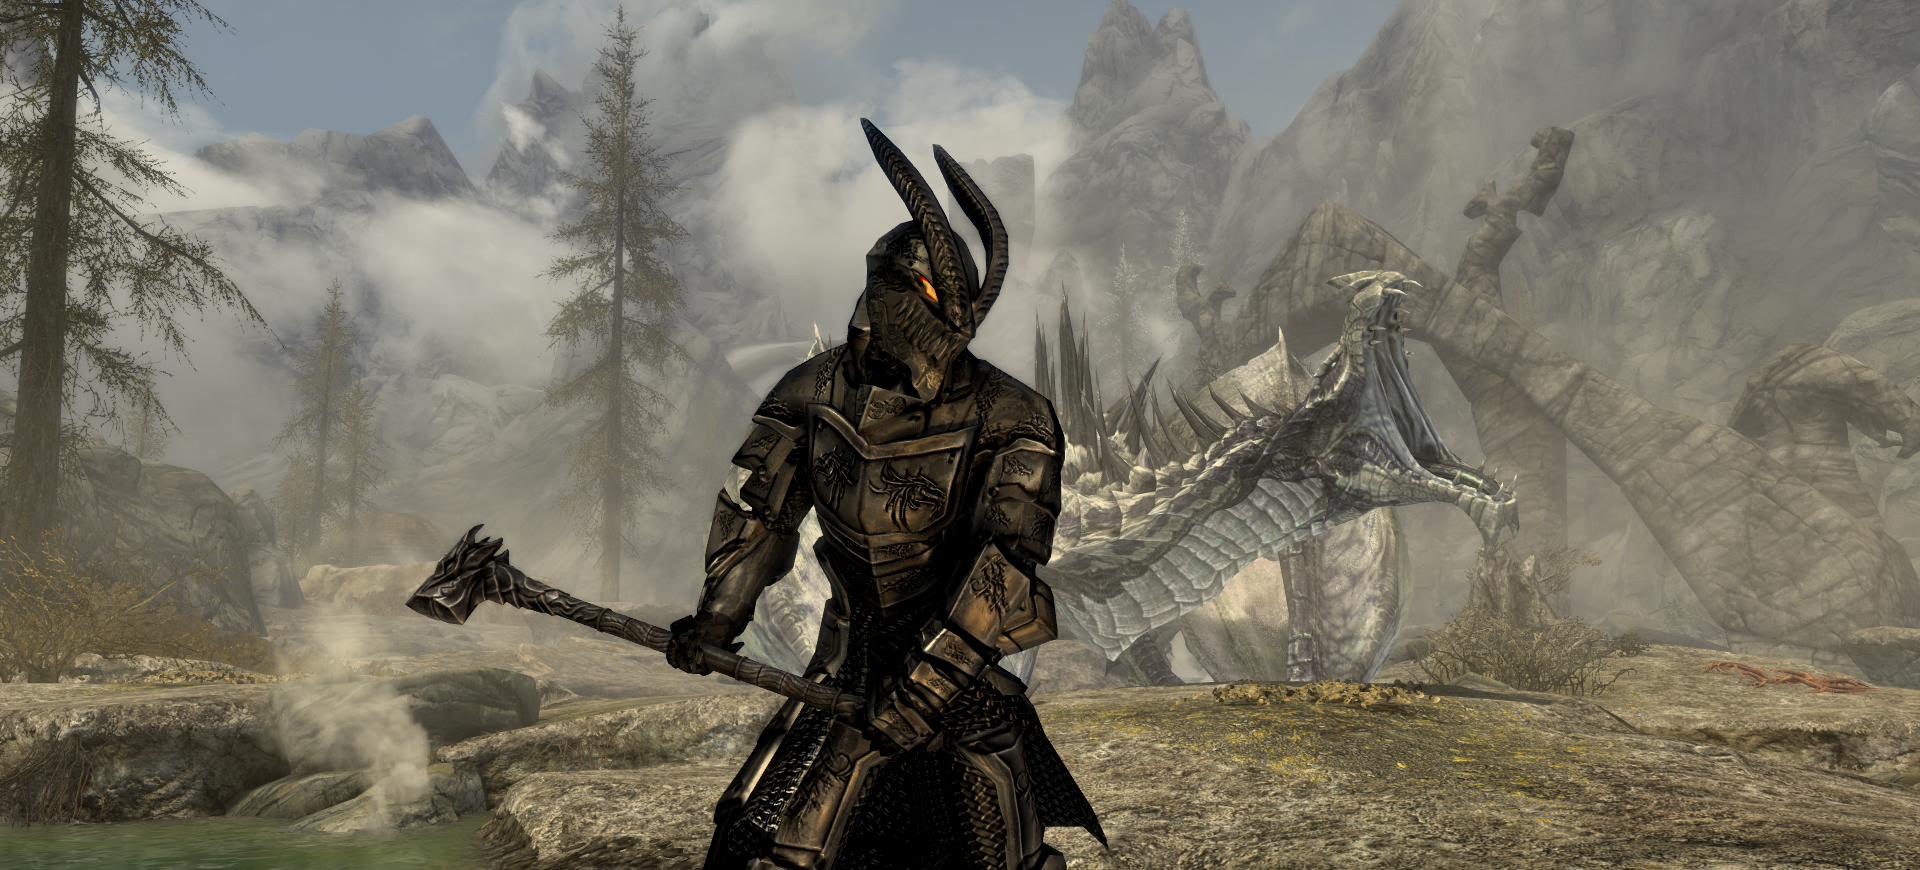 dragon armor skyrim mod